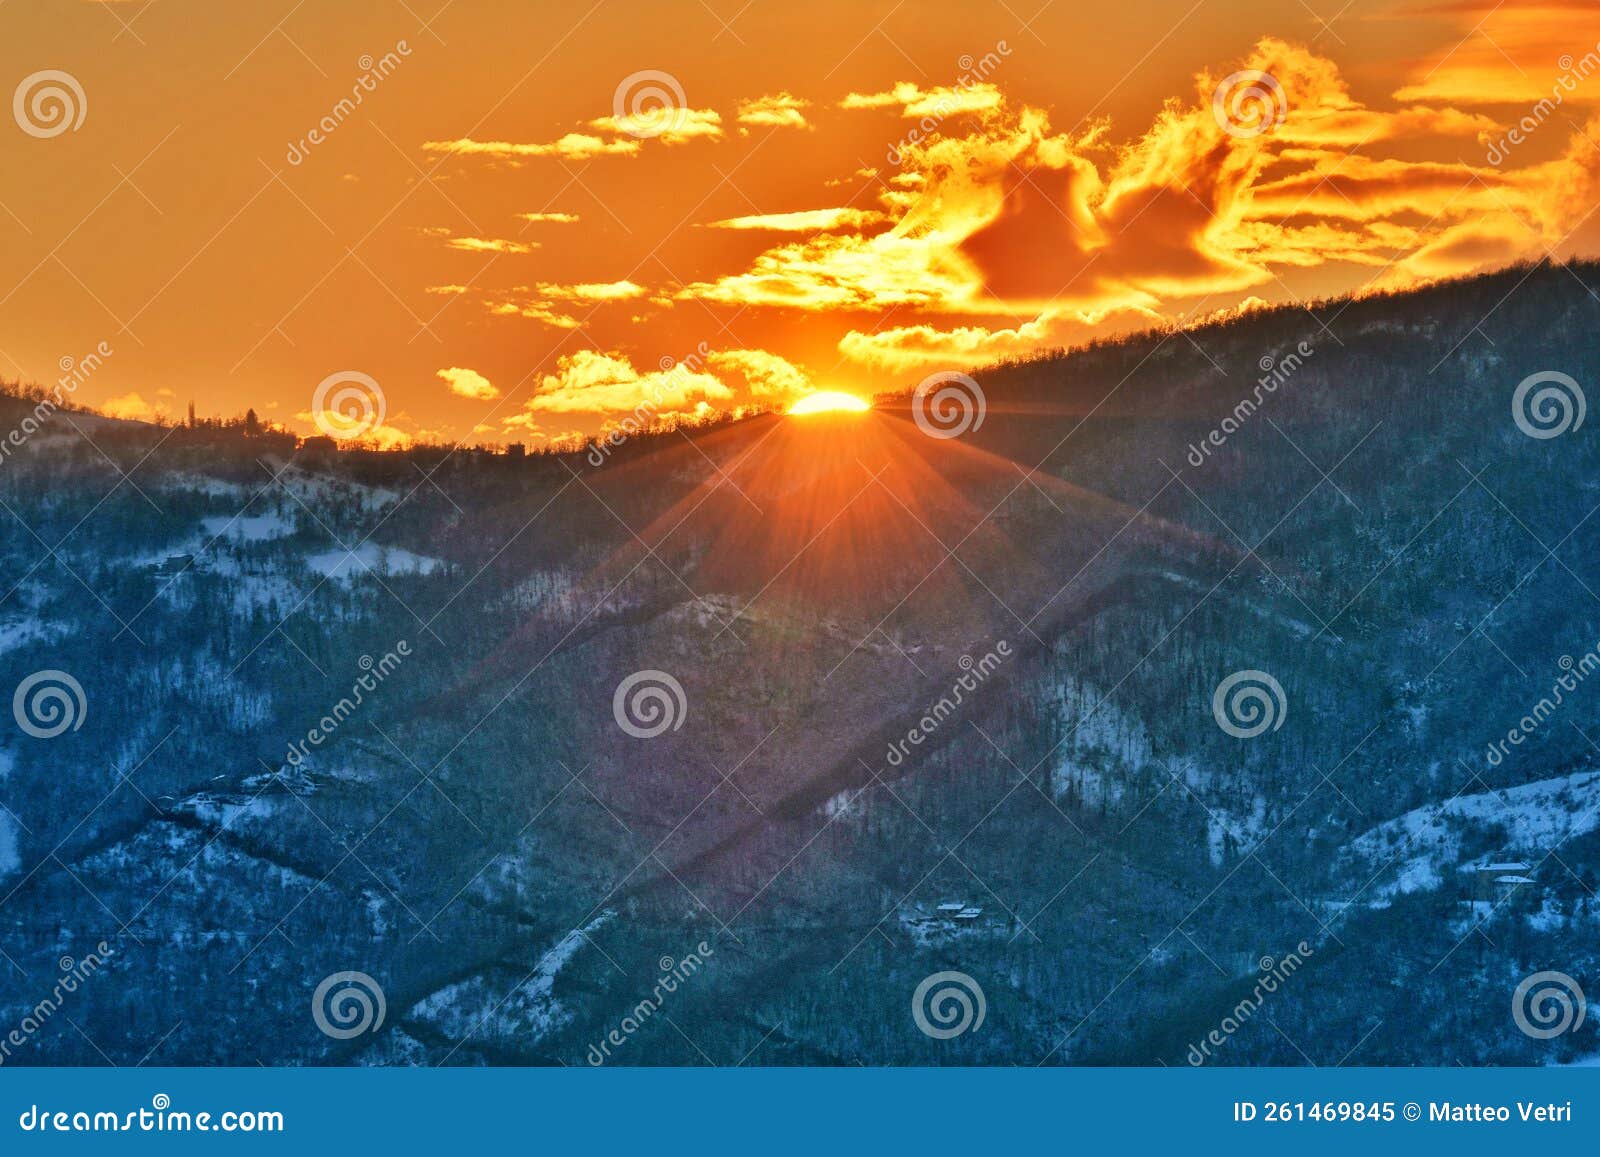 winter sunset on the snowy hills